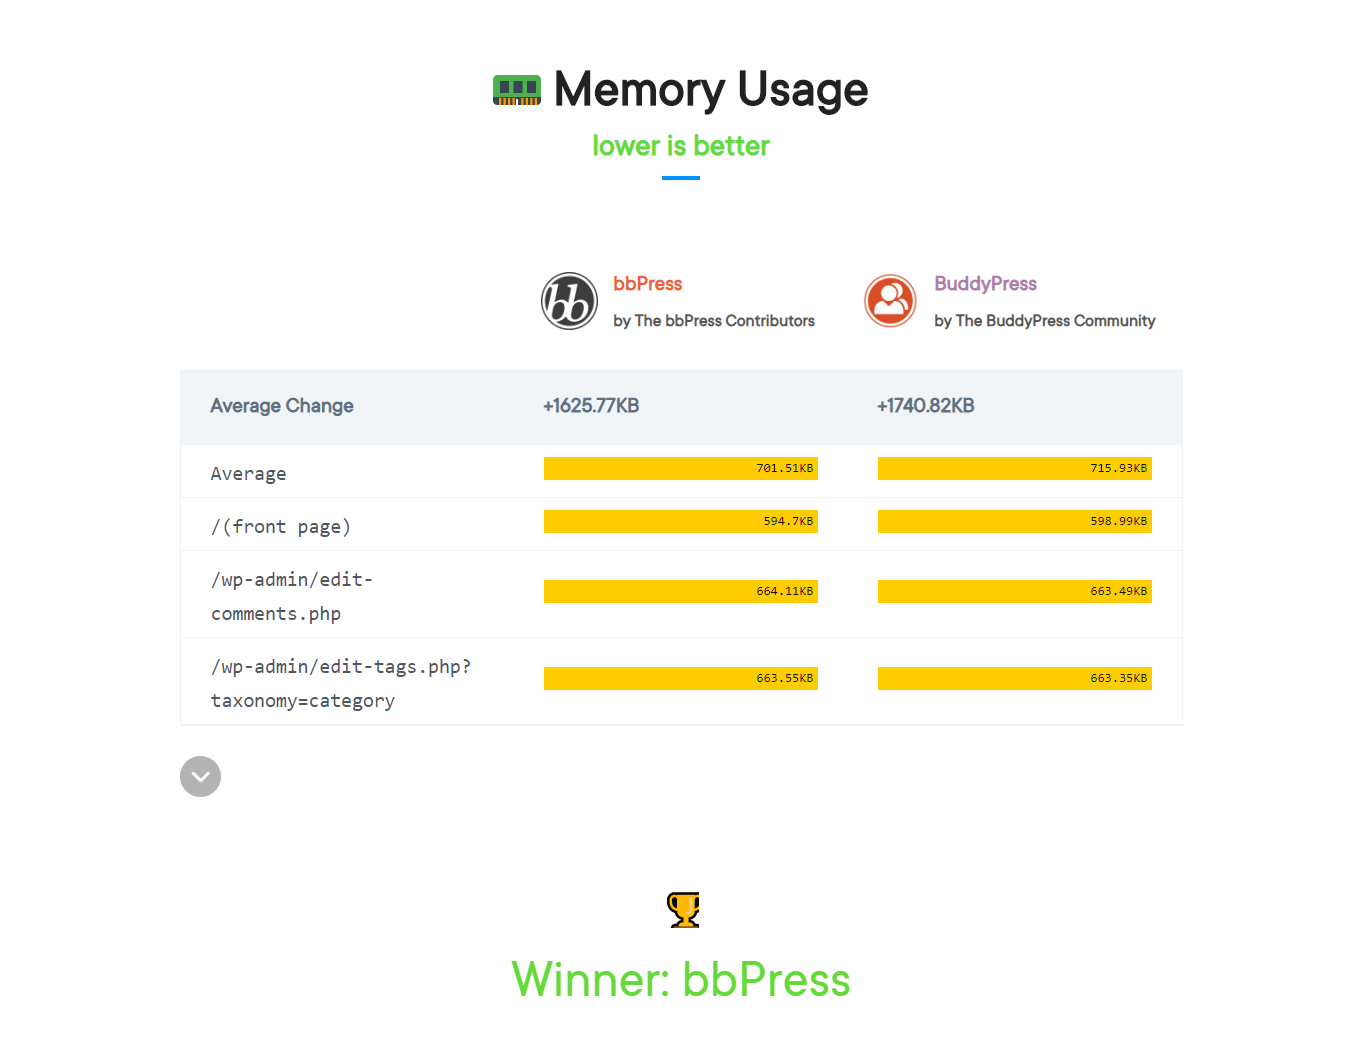 memory usage of bbPress vs BuddyPress